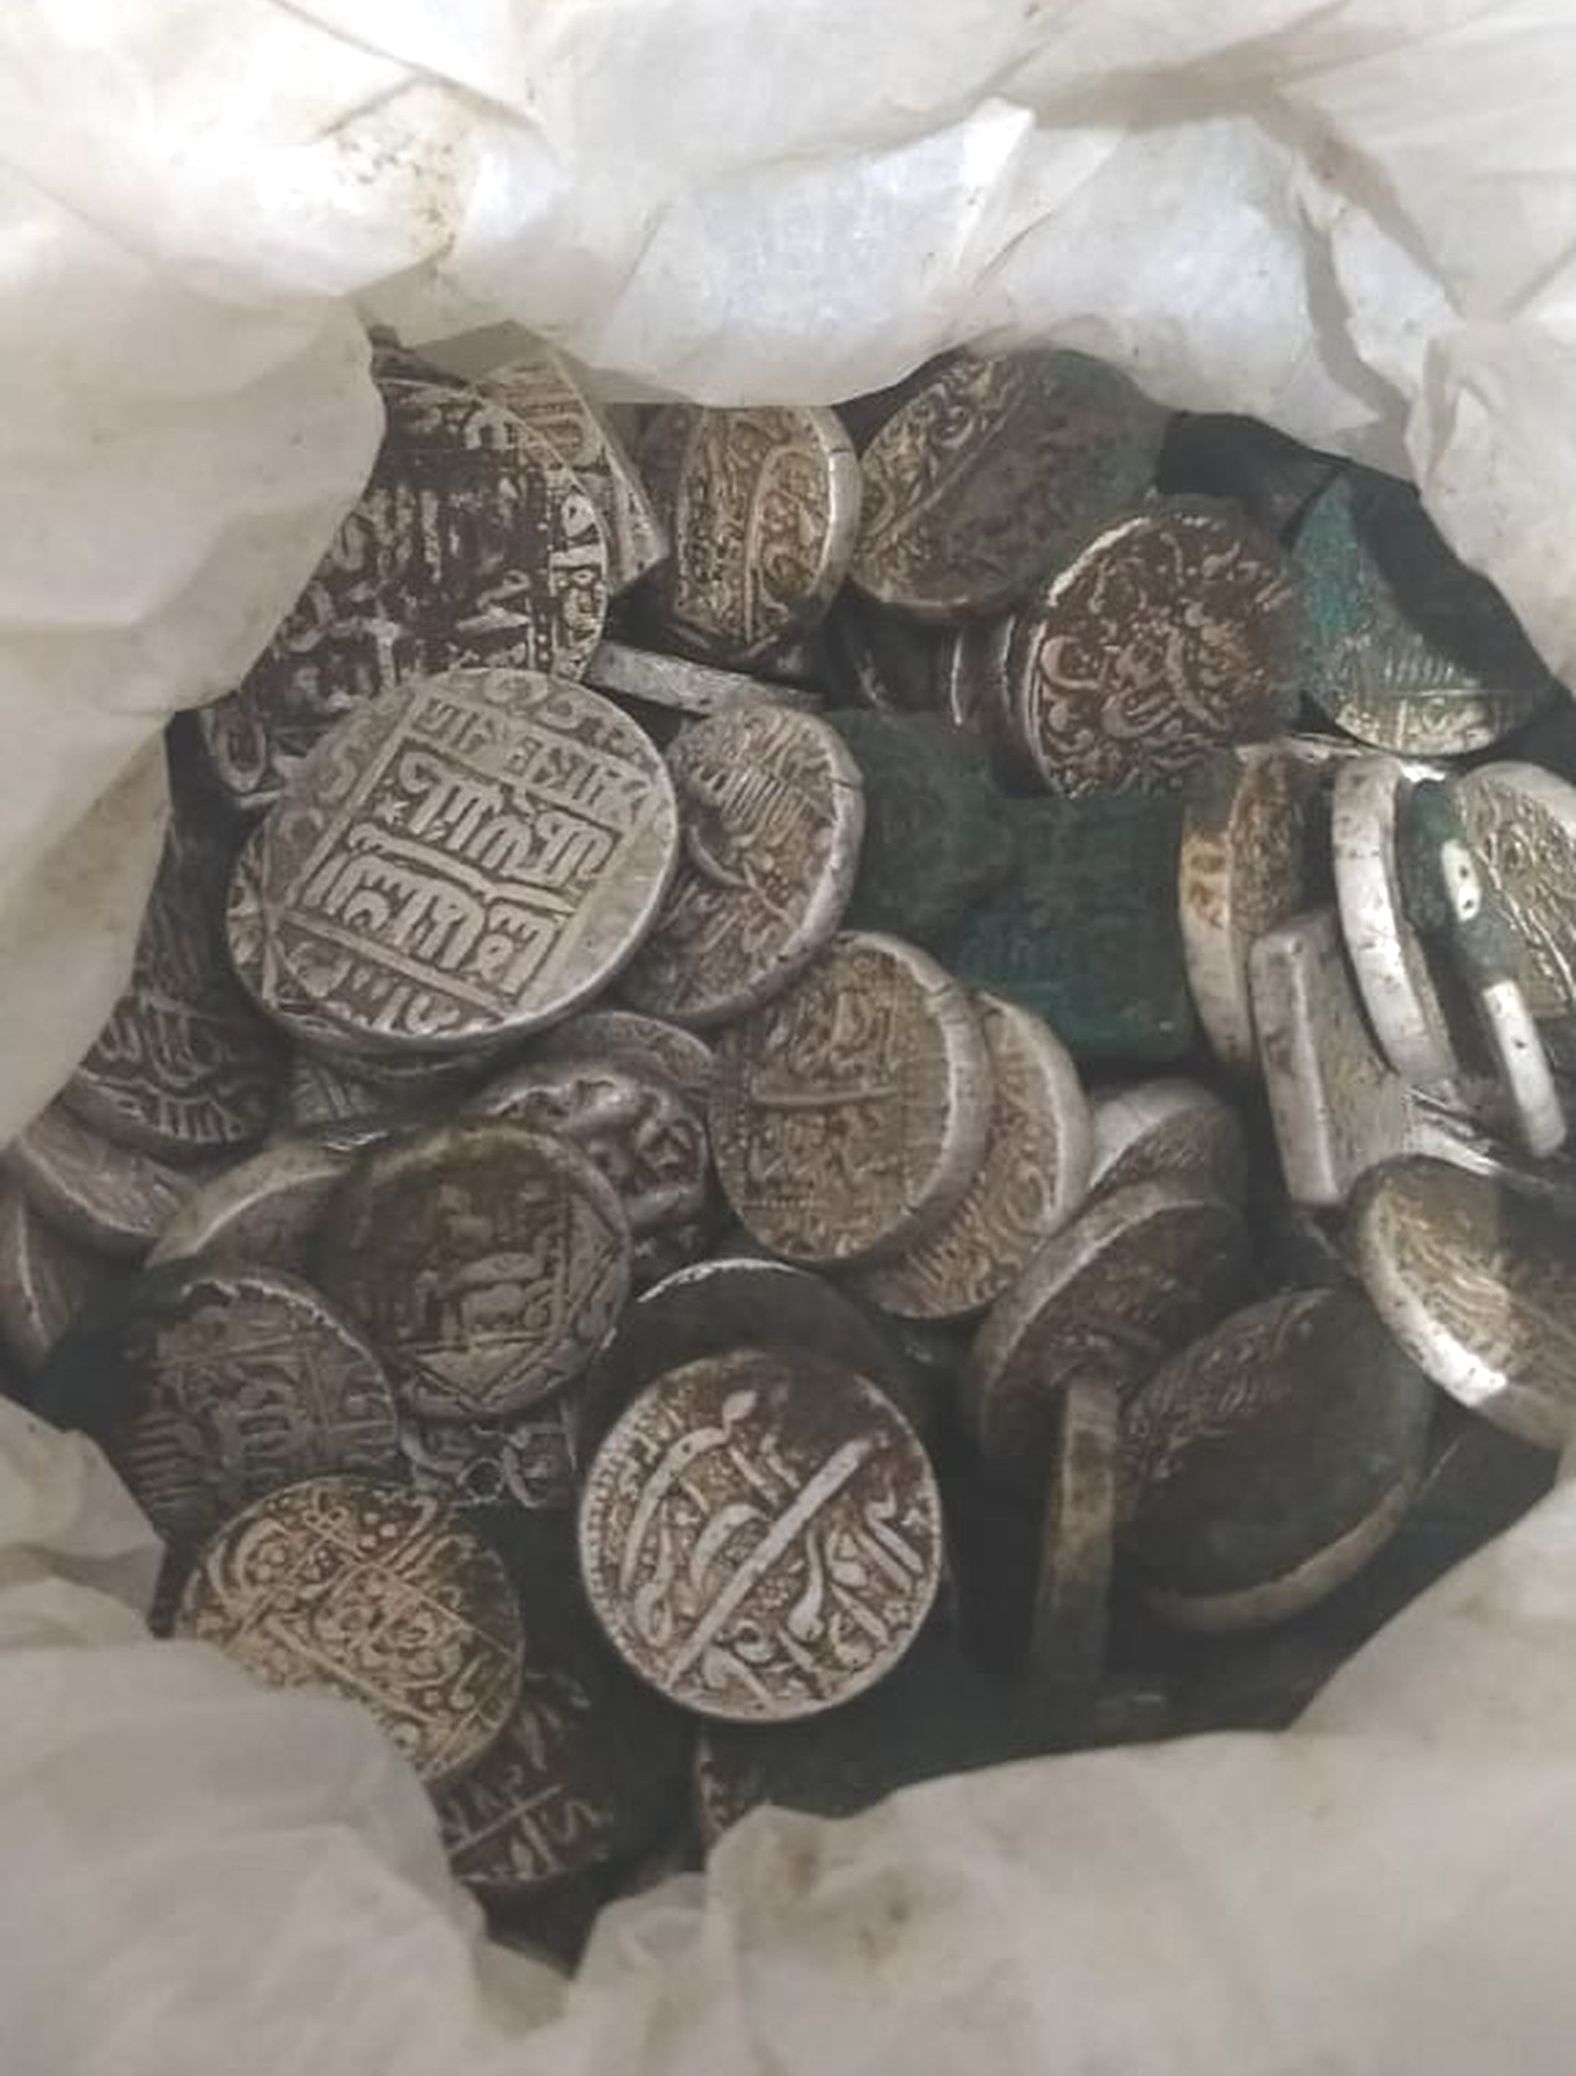  Mughal period coins found in MGNREGA excavations in Burhanpur